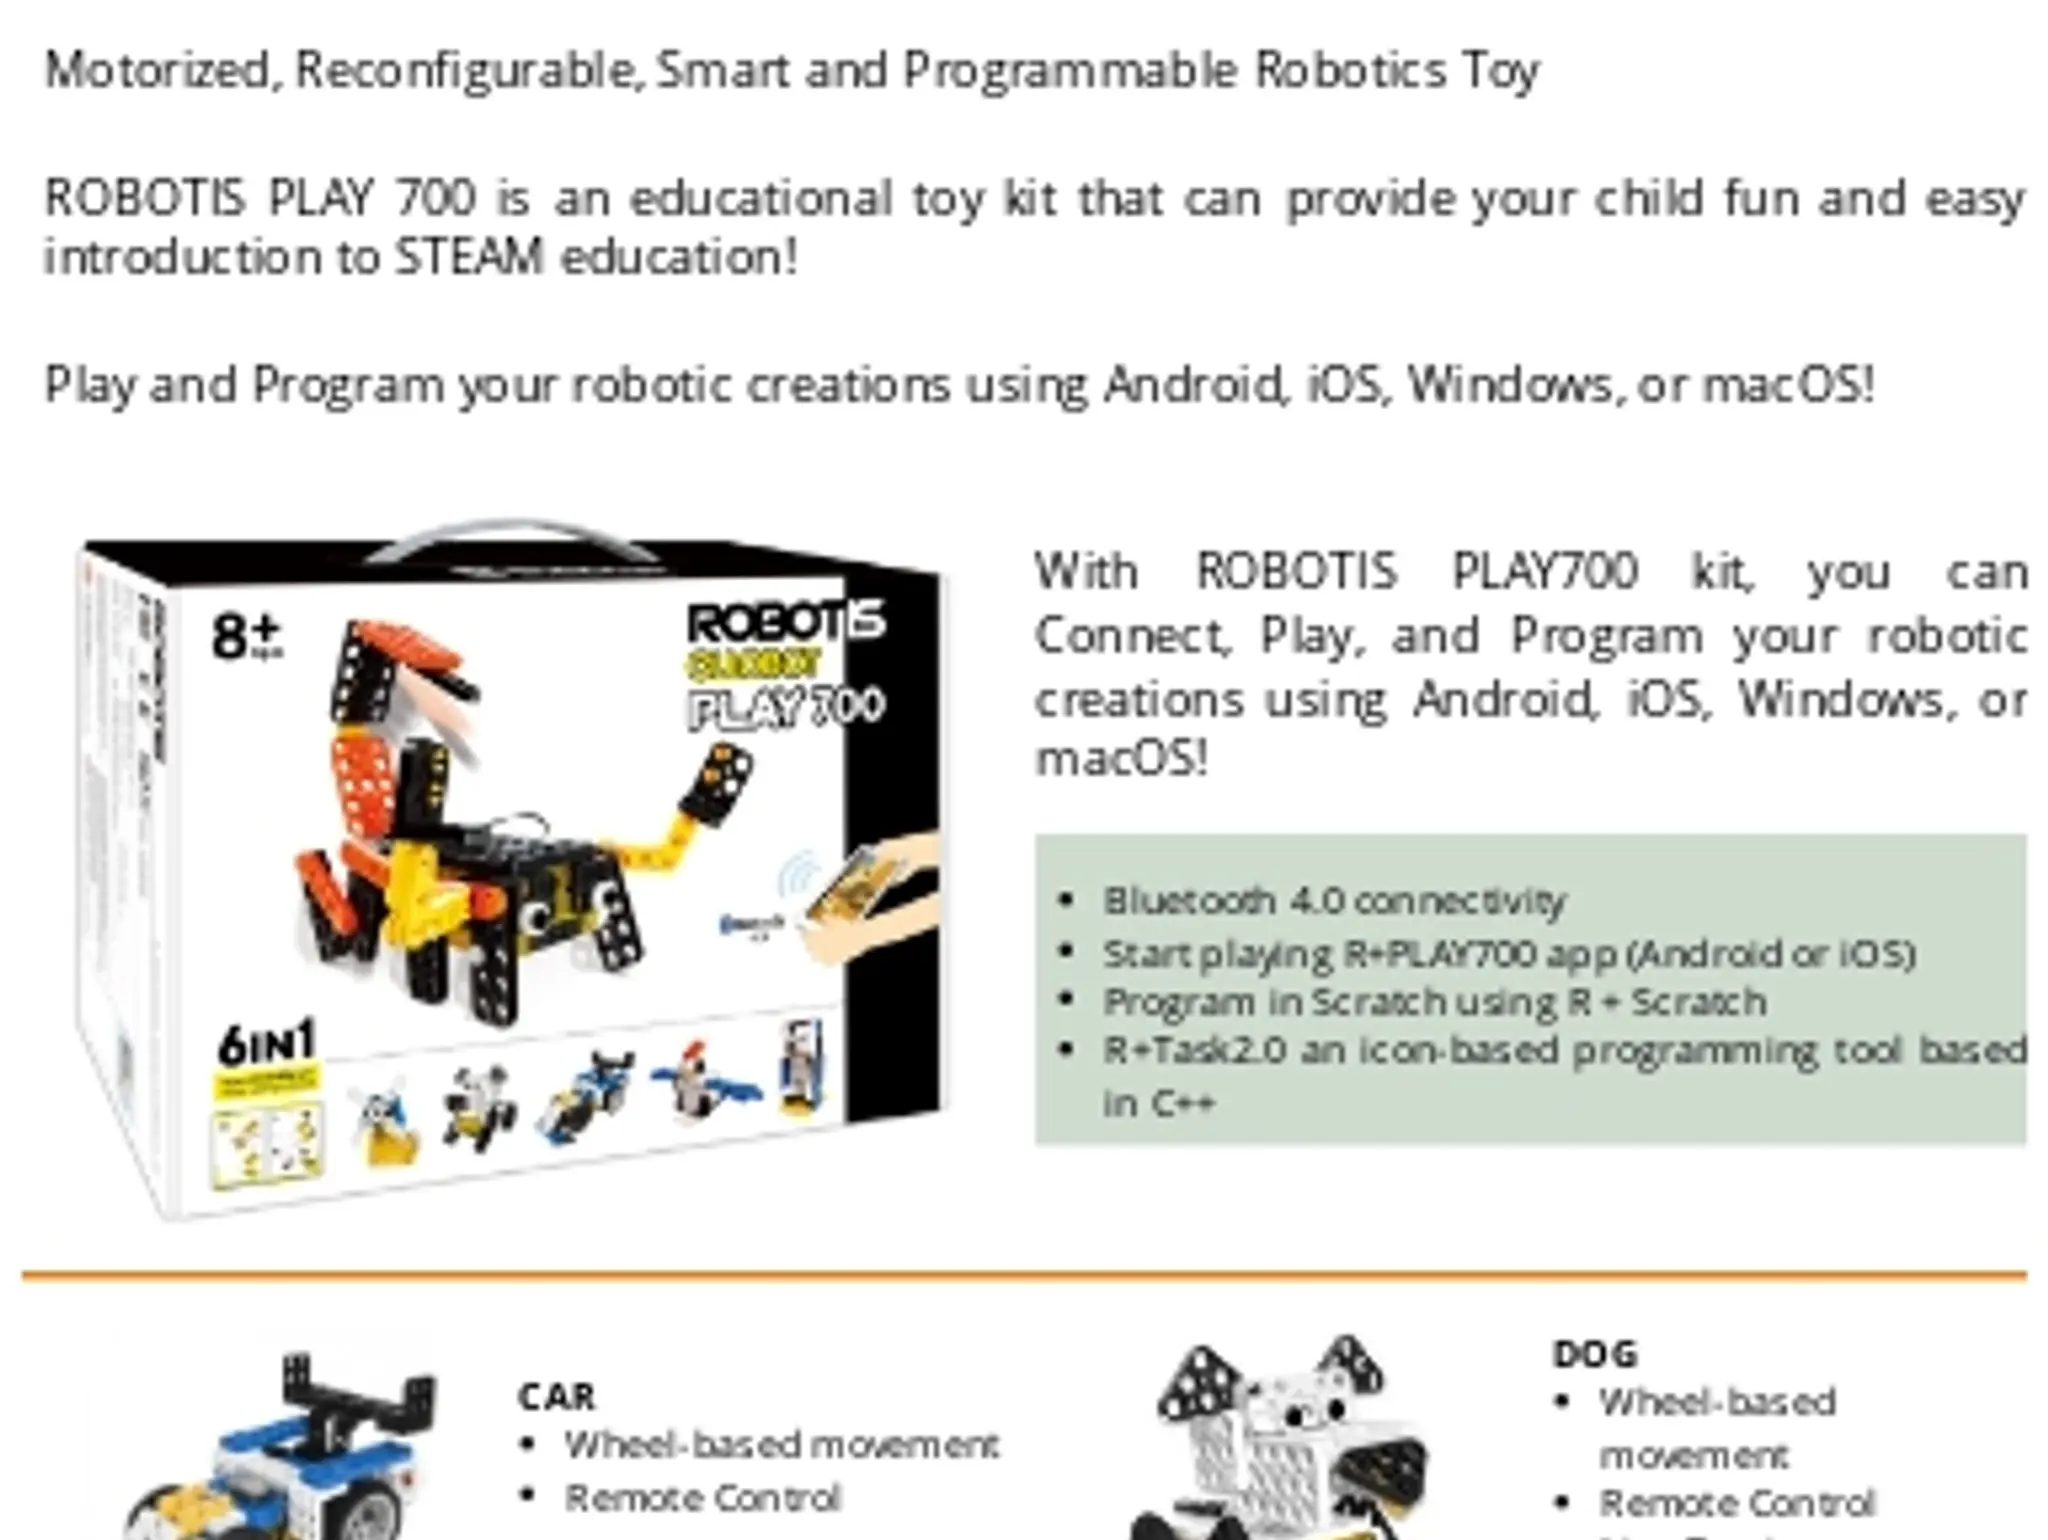 Robotis Play 700